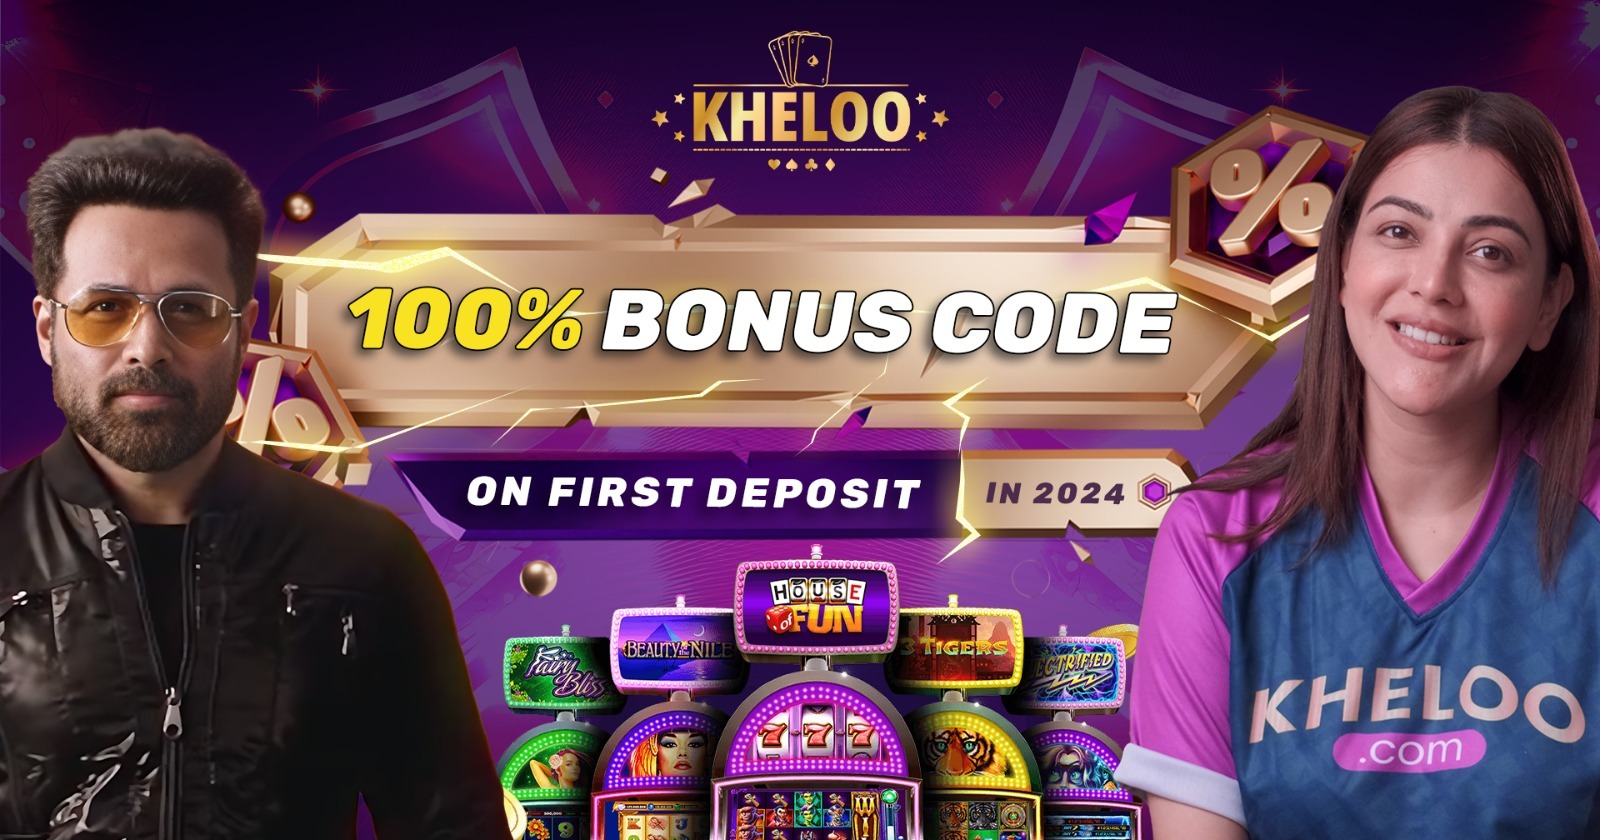 Kheloo 100% Bonus Code on the 1st Deposit in 2024 - Kheloo